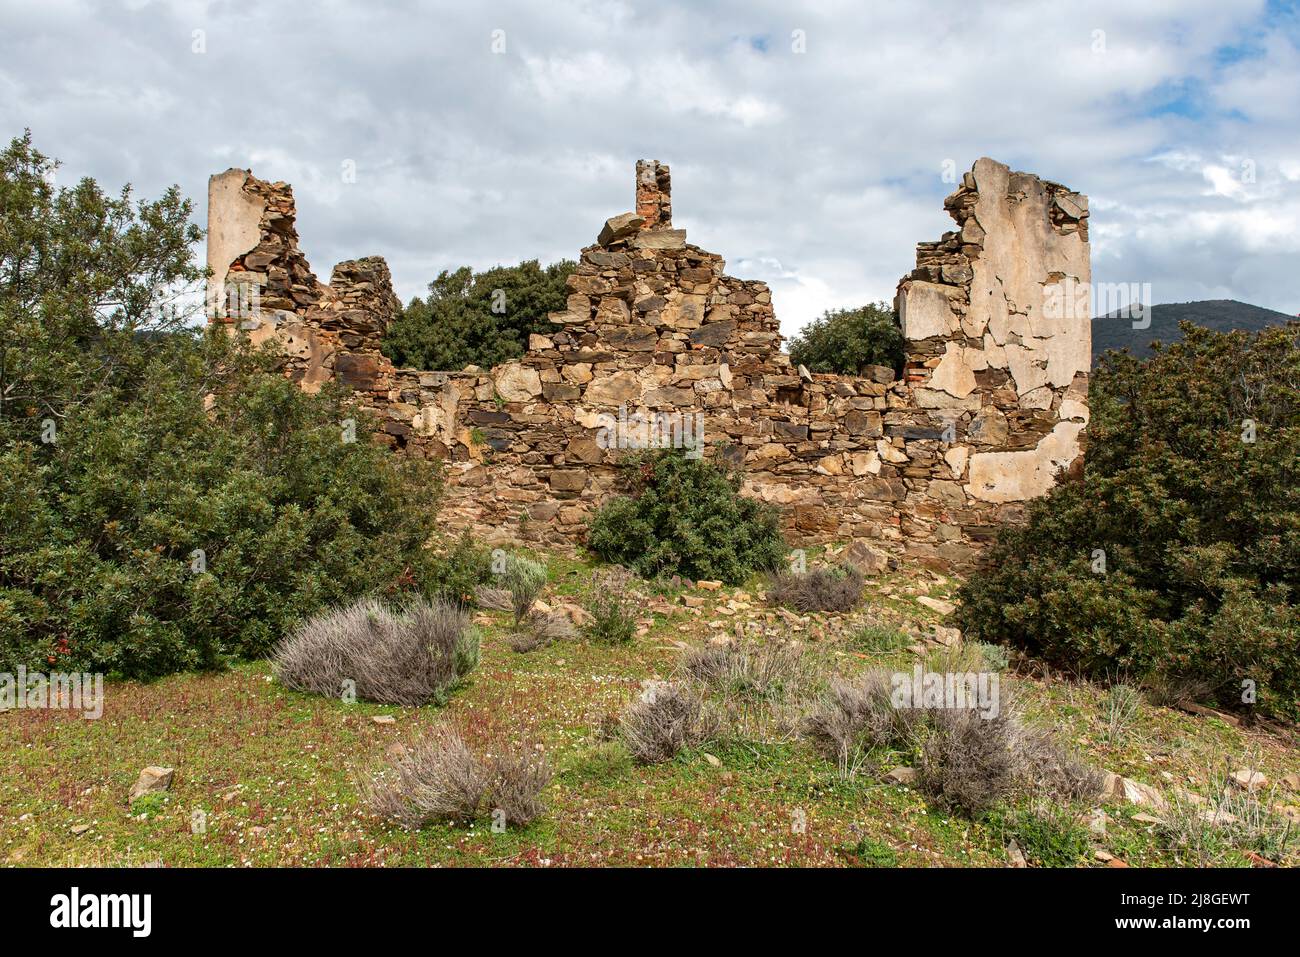 Ruins of house in abandoned mining town of Miniera di Naracauli (Laveria Brassey), Sardinia, Italy Stock Photo